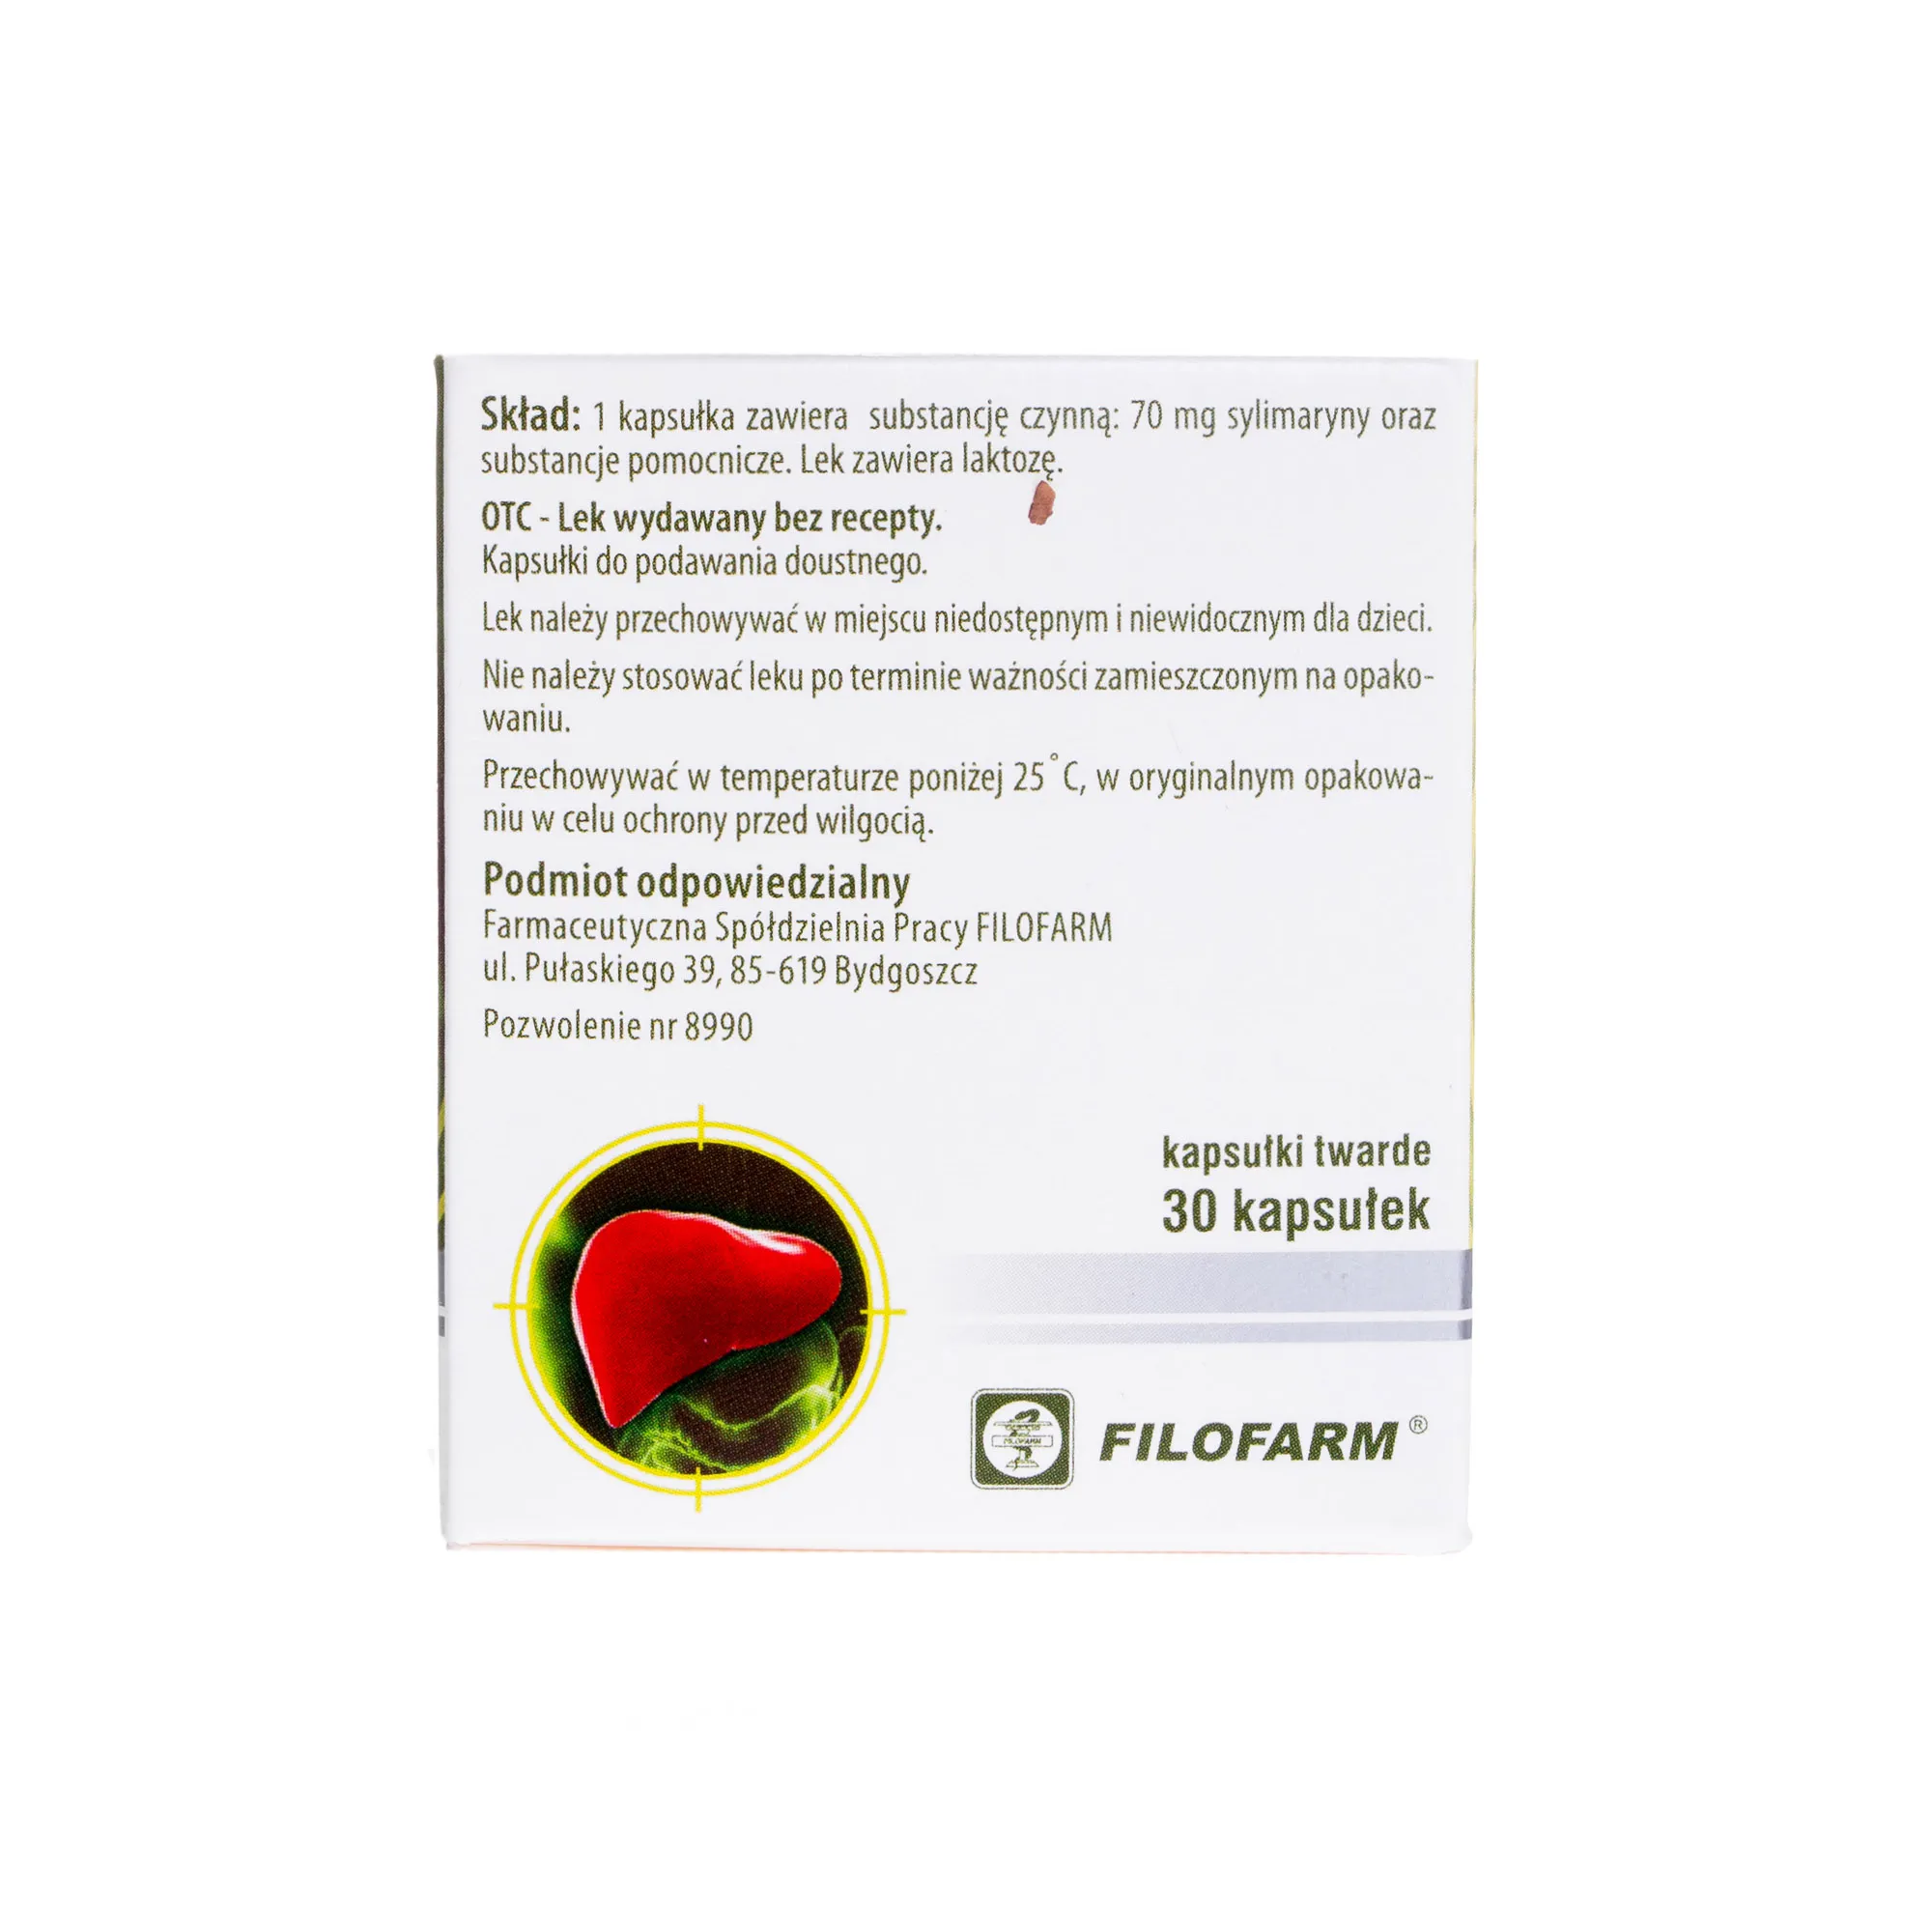 Silimax 70 mg - 30 kapsułek twardych 